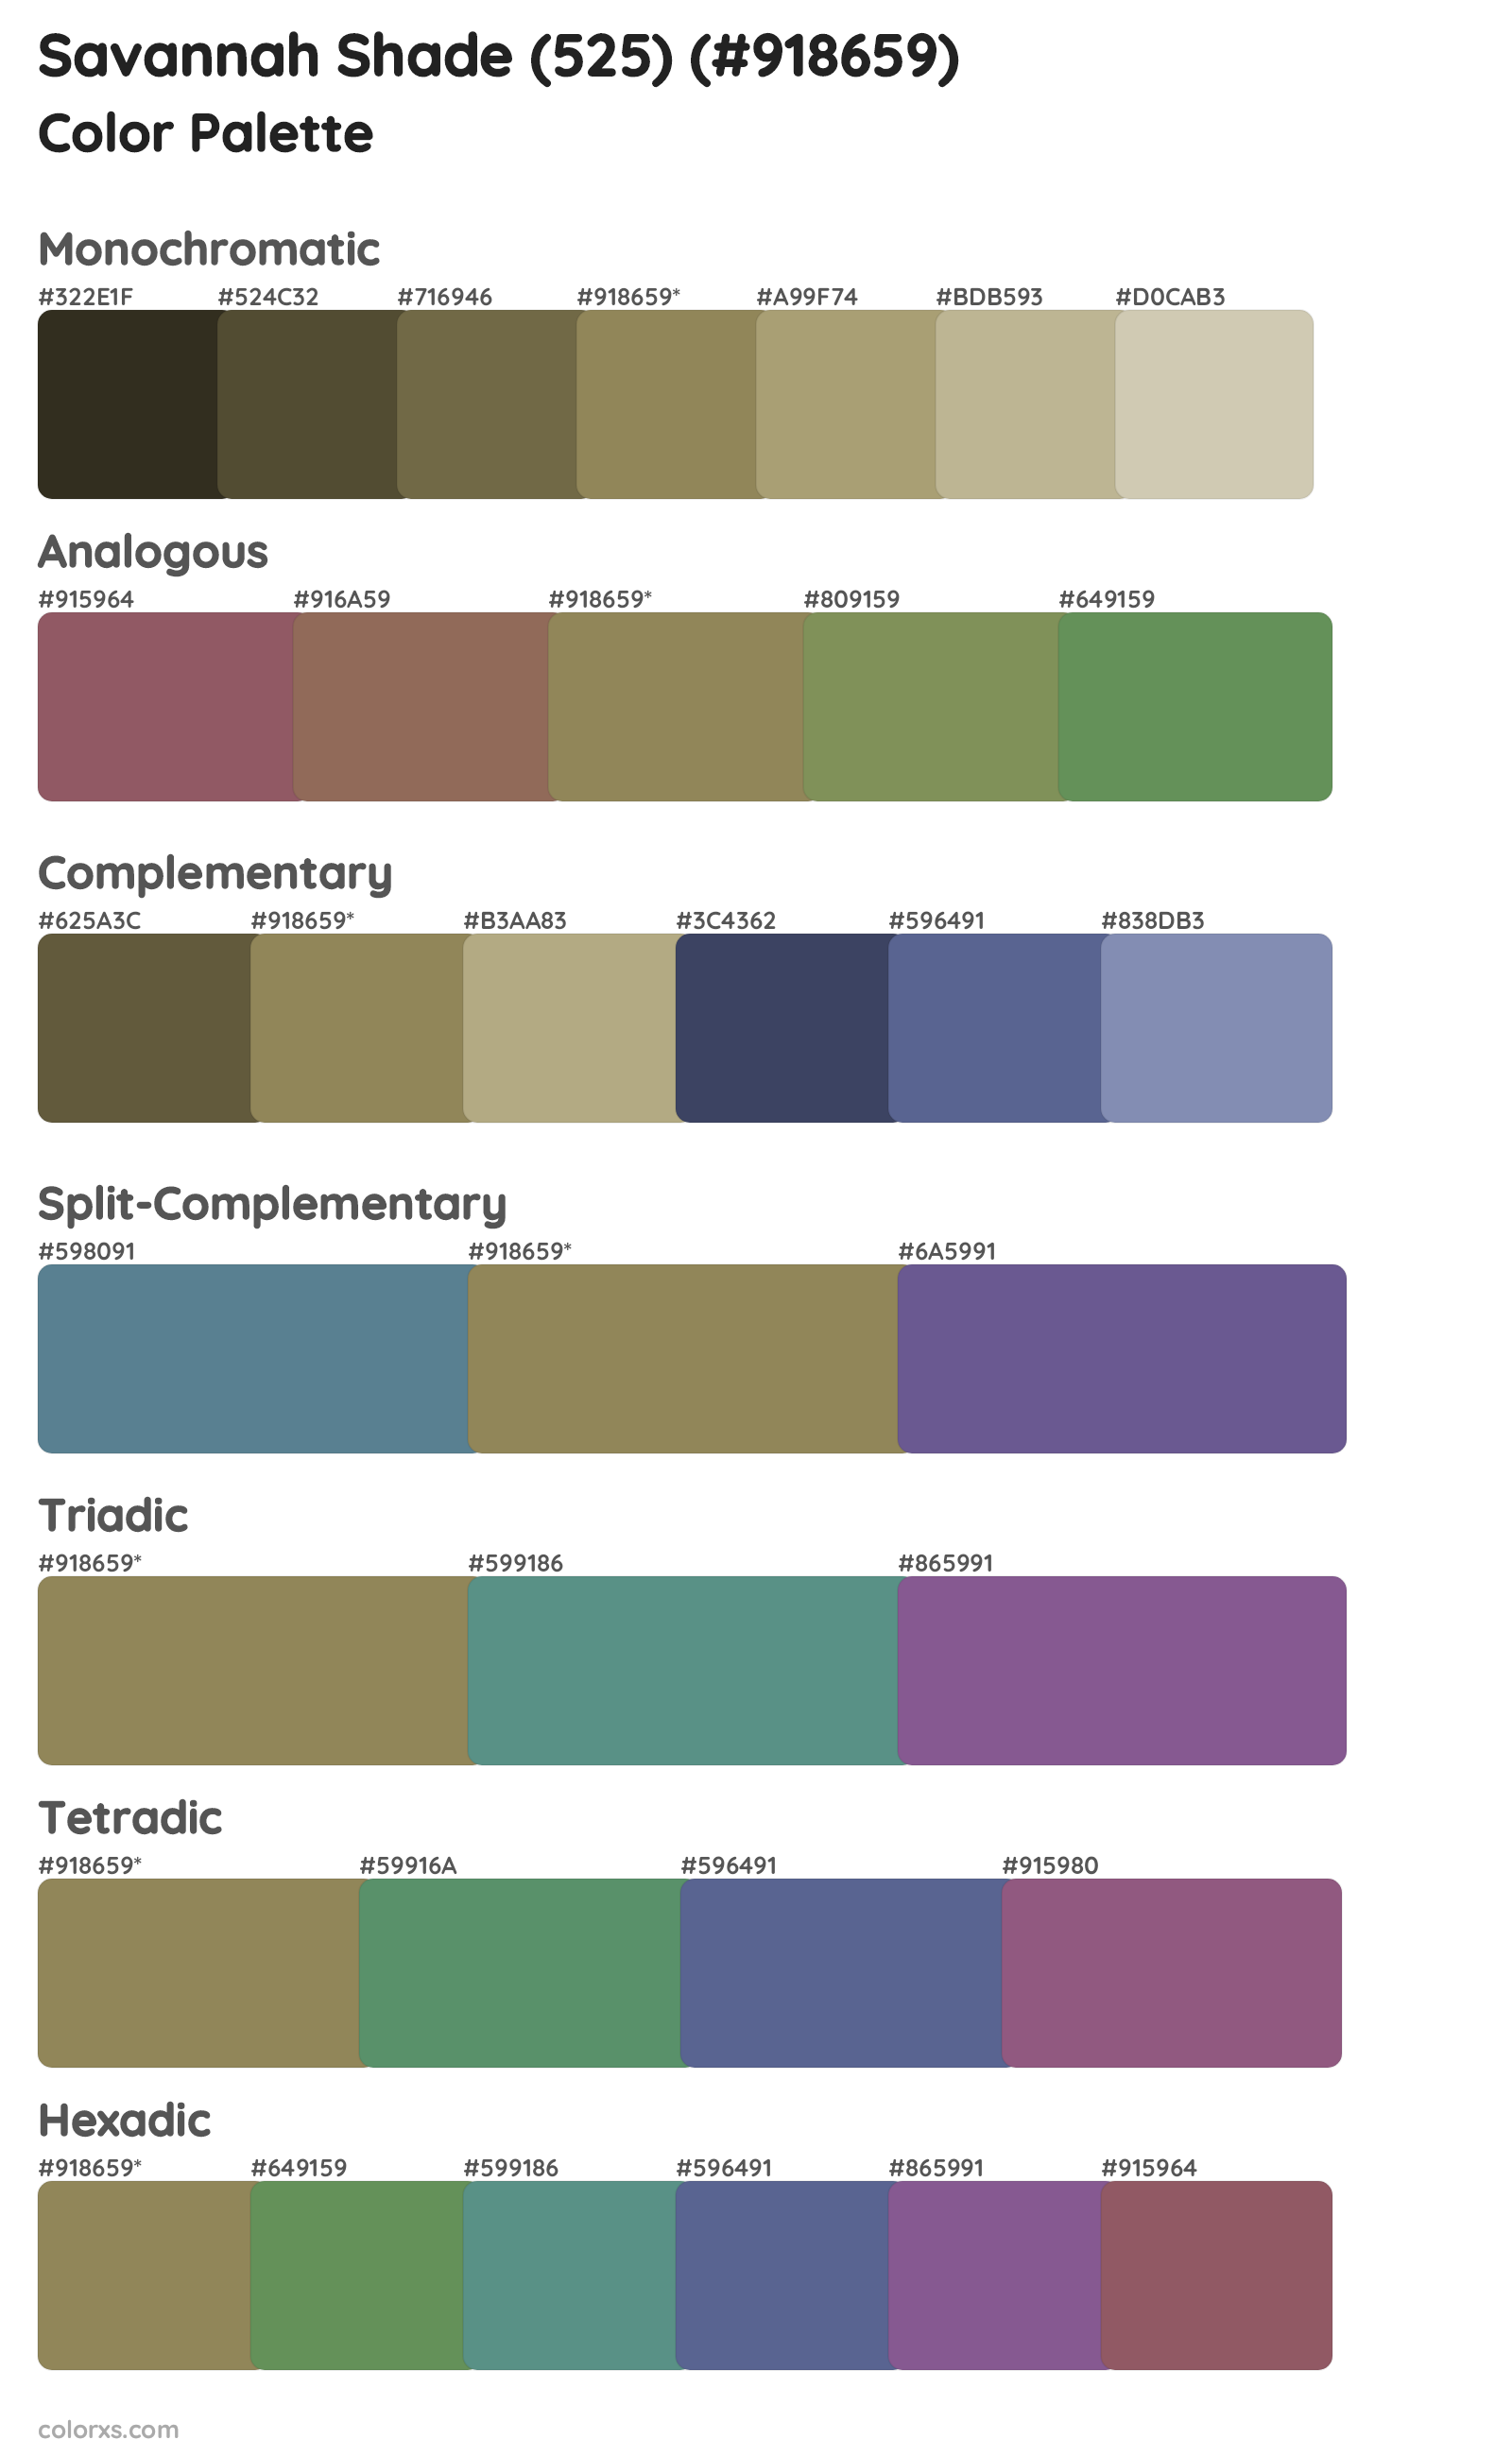 Savannah Shade (525) Color Scheme Palettes